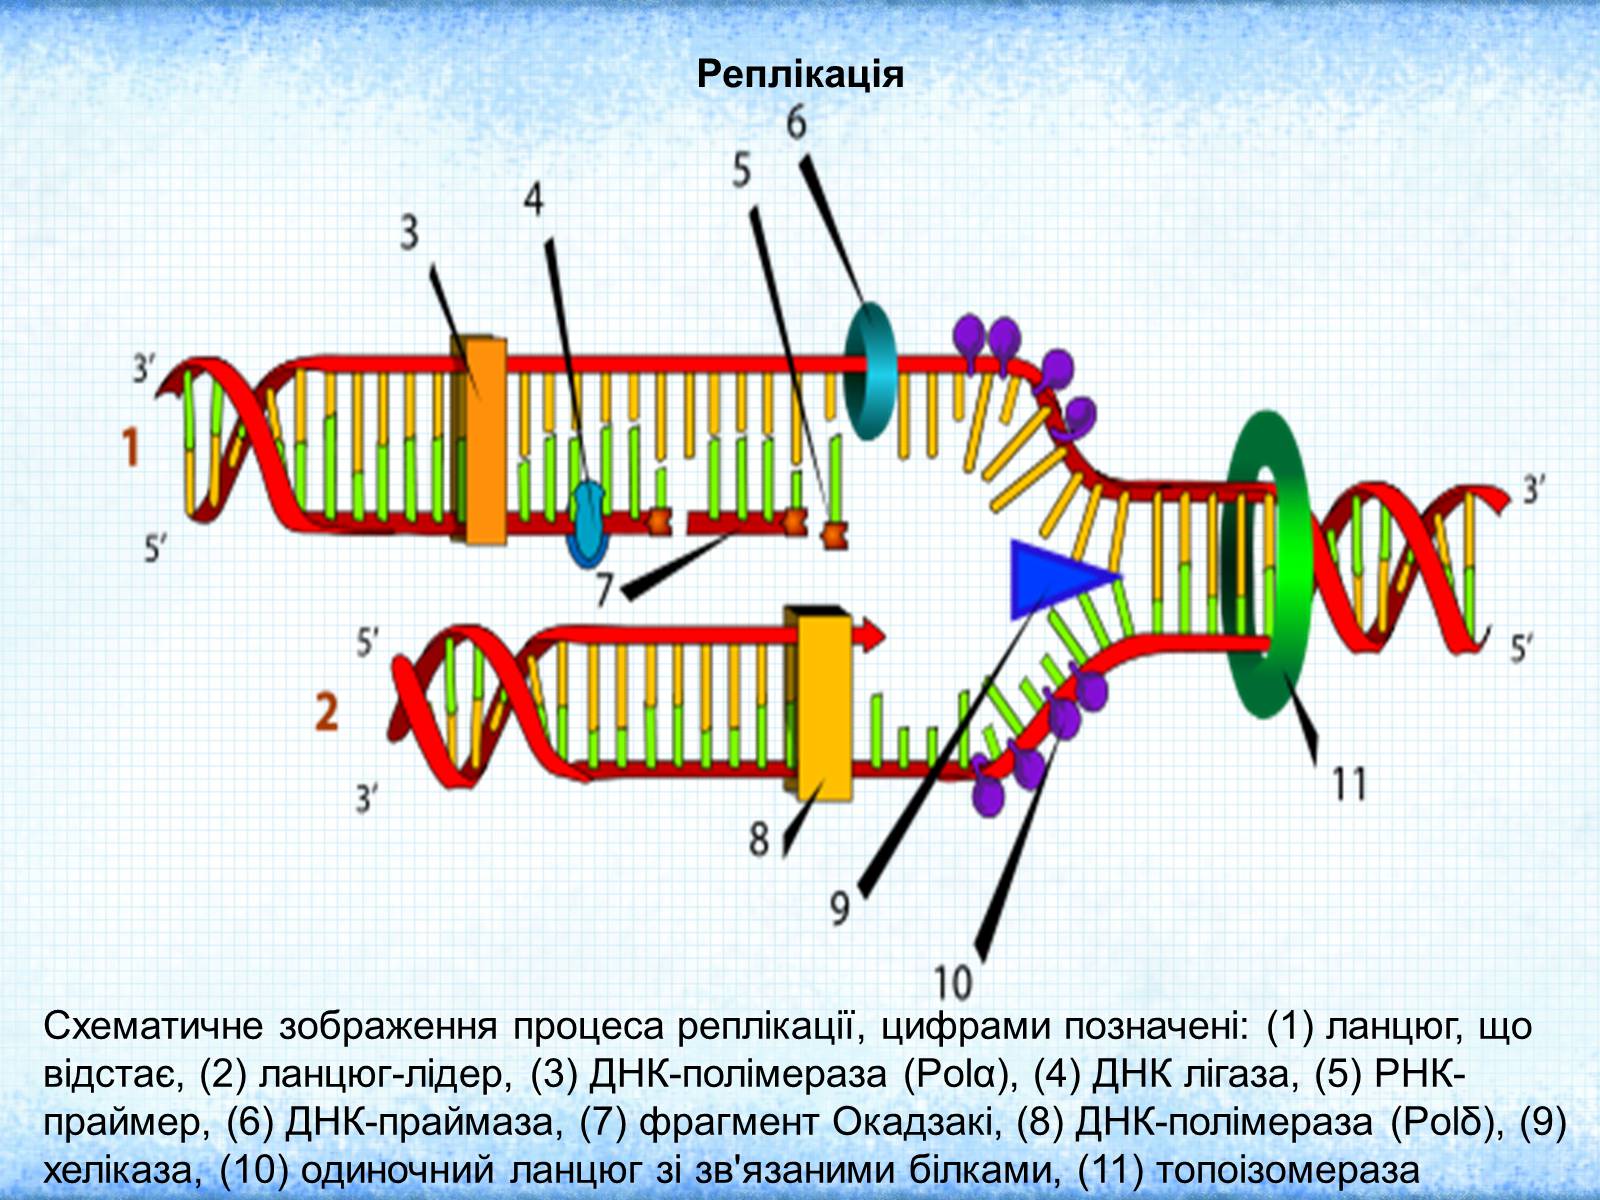 Рнк затравка. ДНК праймаза. Праймаза в репликации ДНК. Репликация ДНК. Затравка РНК праймаза.